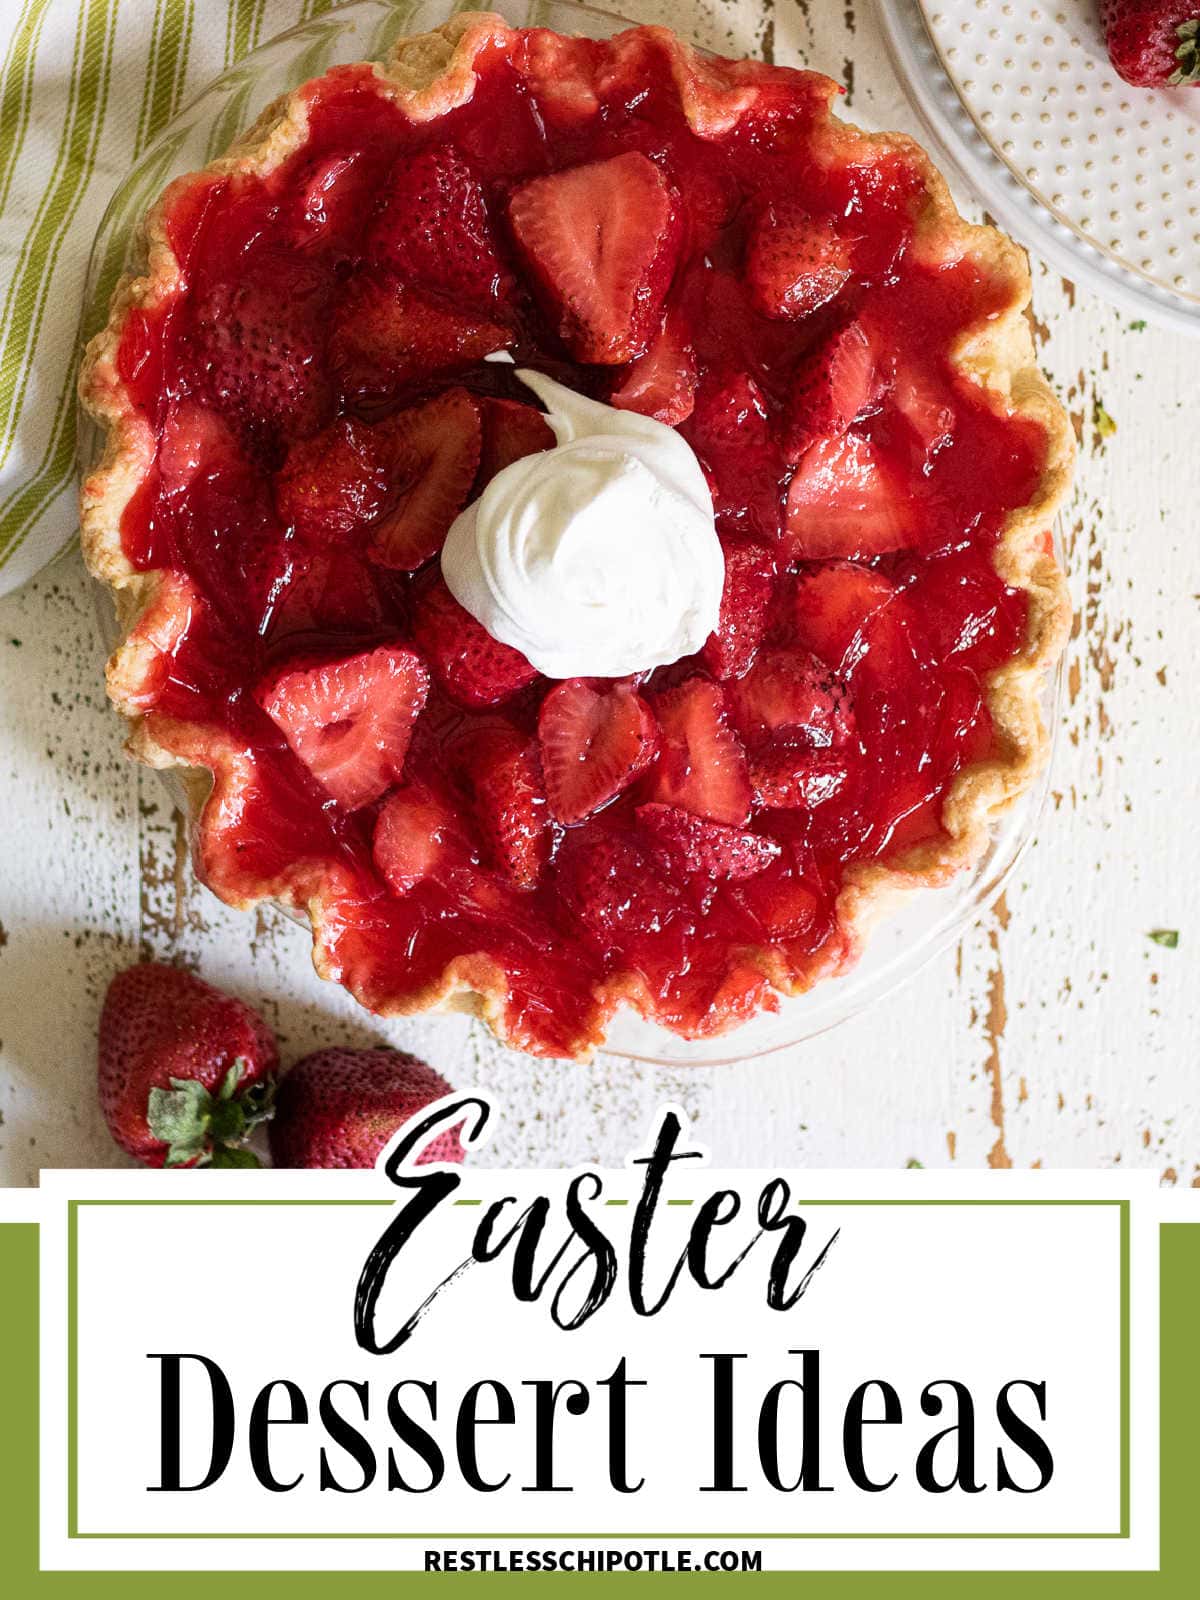 Easy Easter Desserts